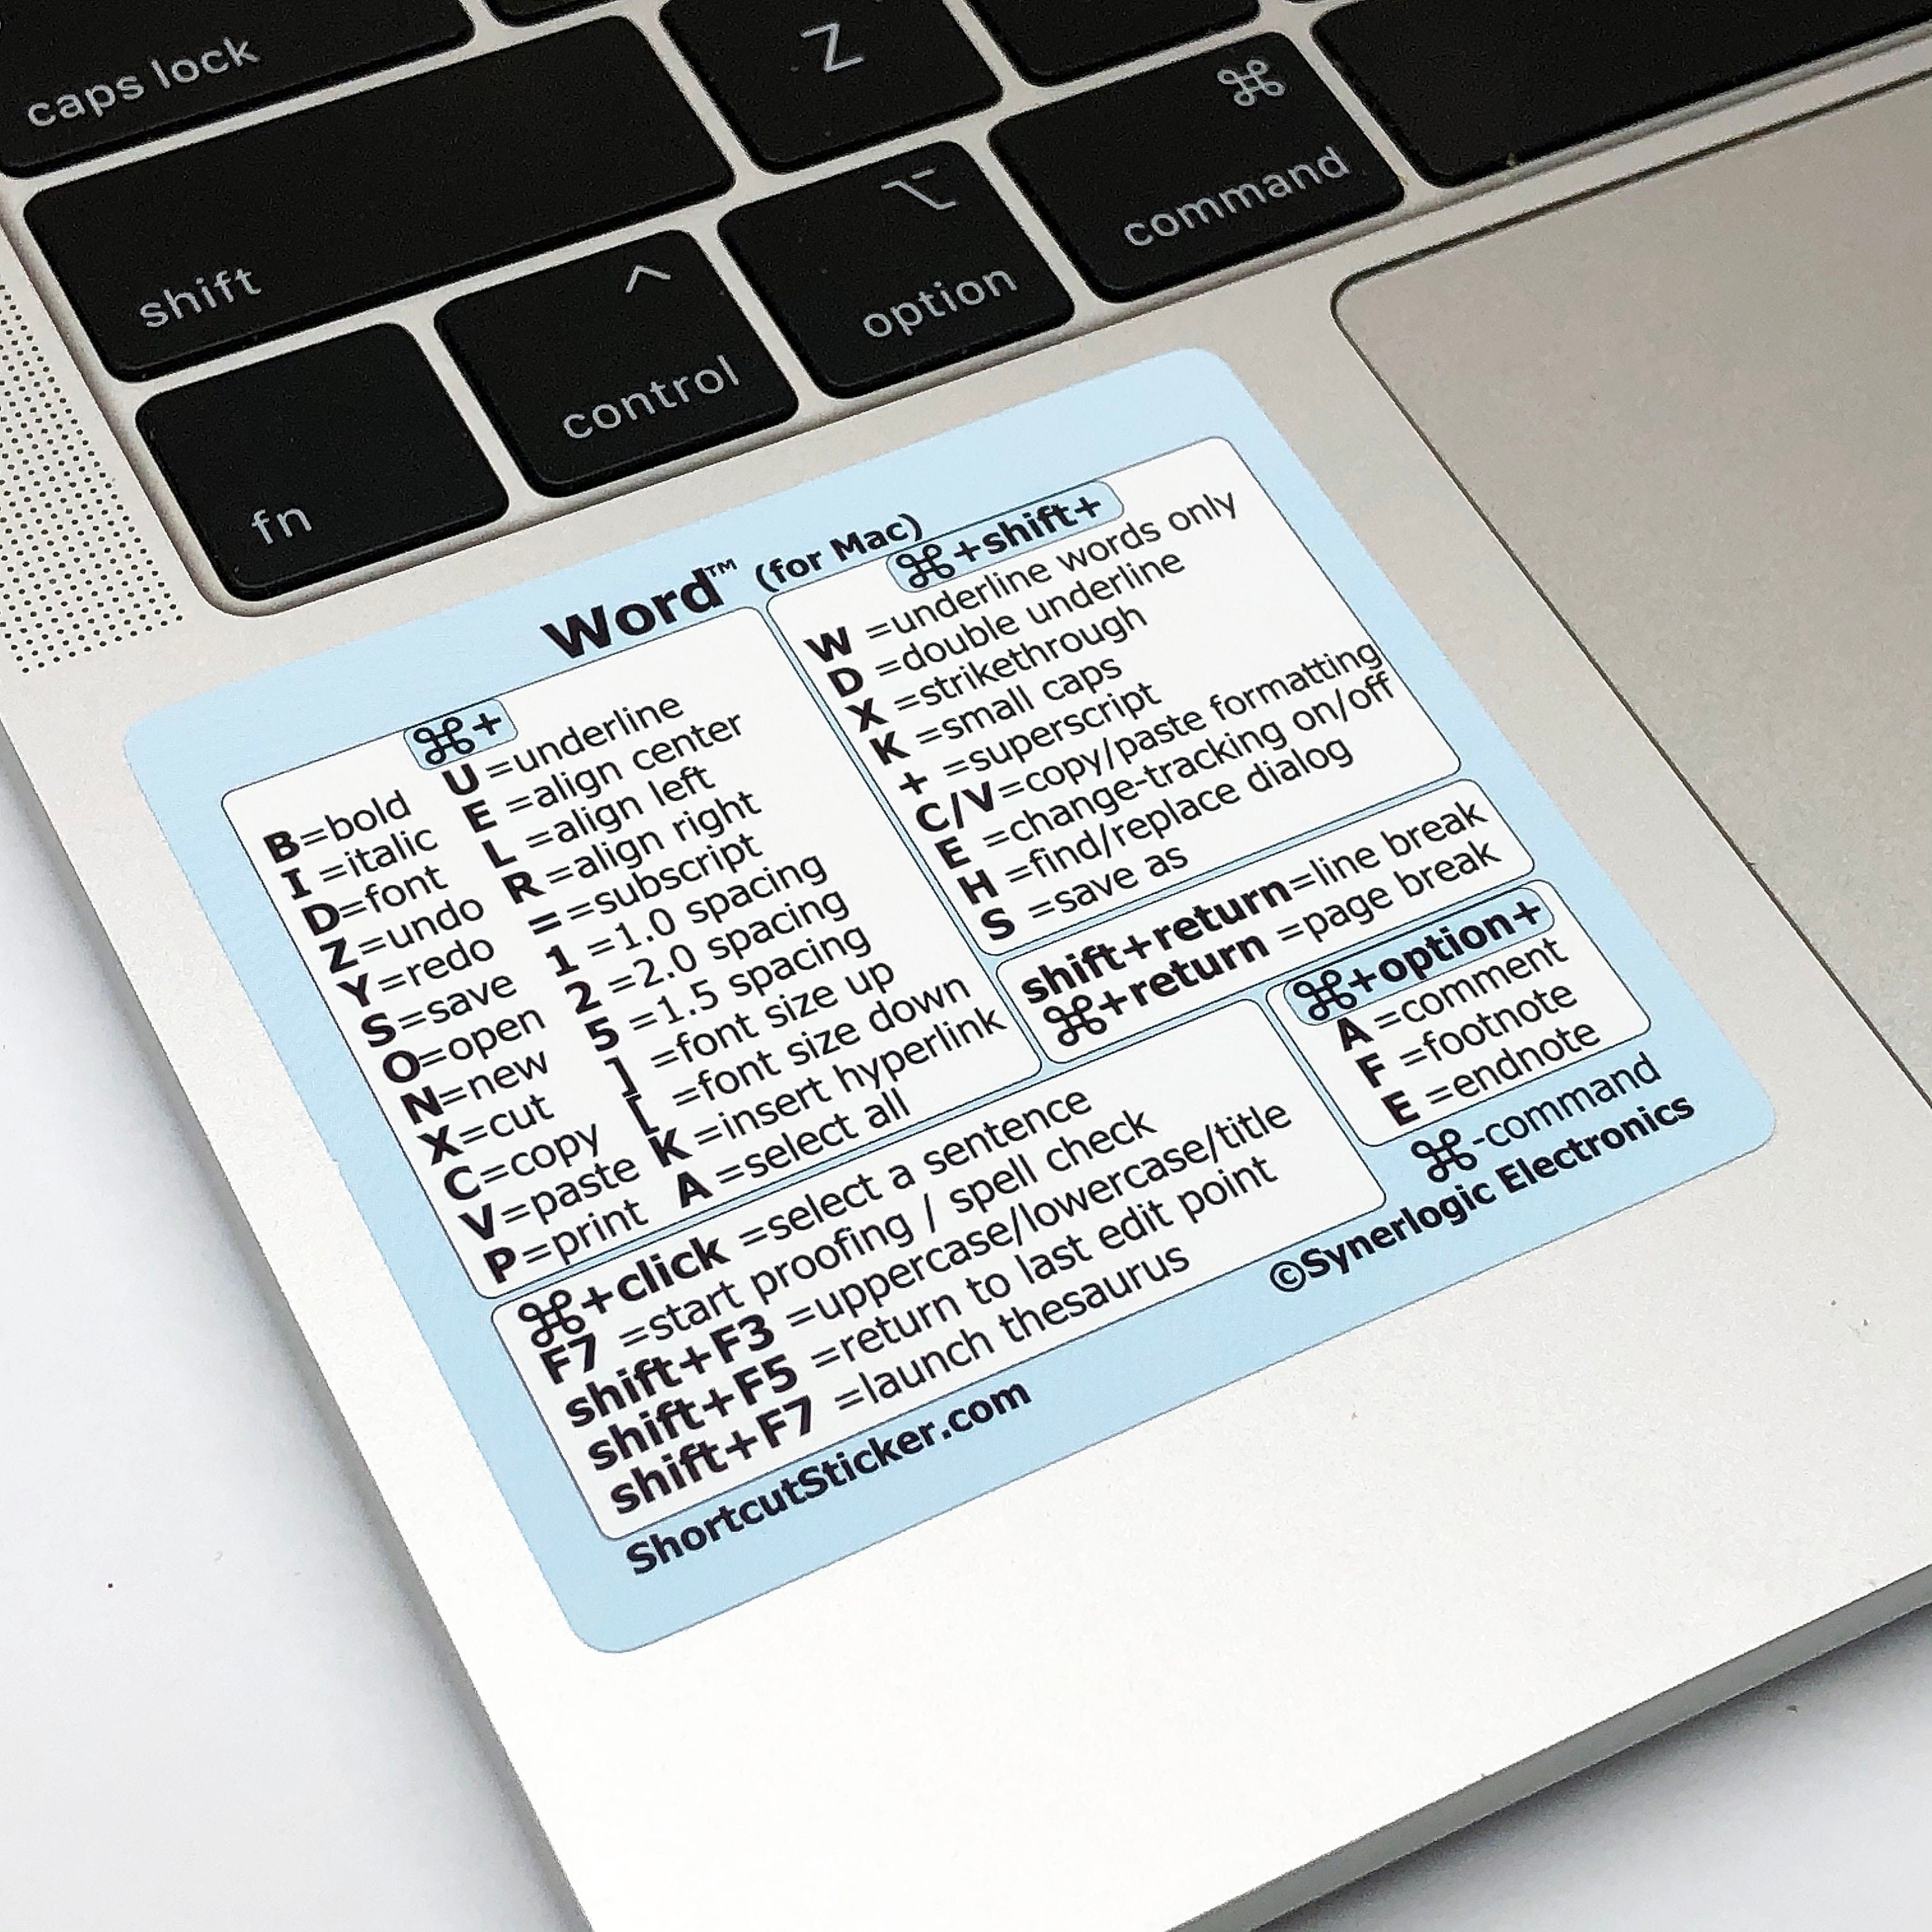 Mac OS m1/m2/m3/intel Reference Keyboard Shortcut Sticker Laminated  No-residue Vinyl for Any Macbook/imac/mac Mini by SYNERLOGIC 